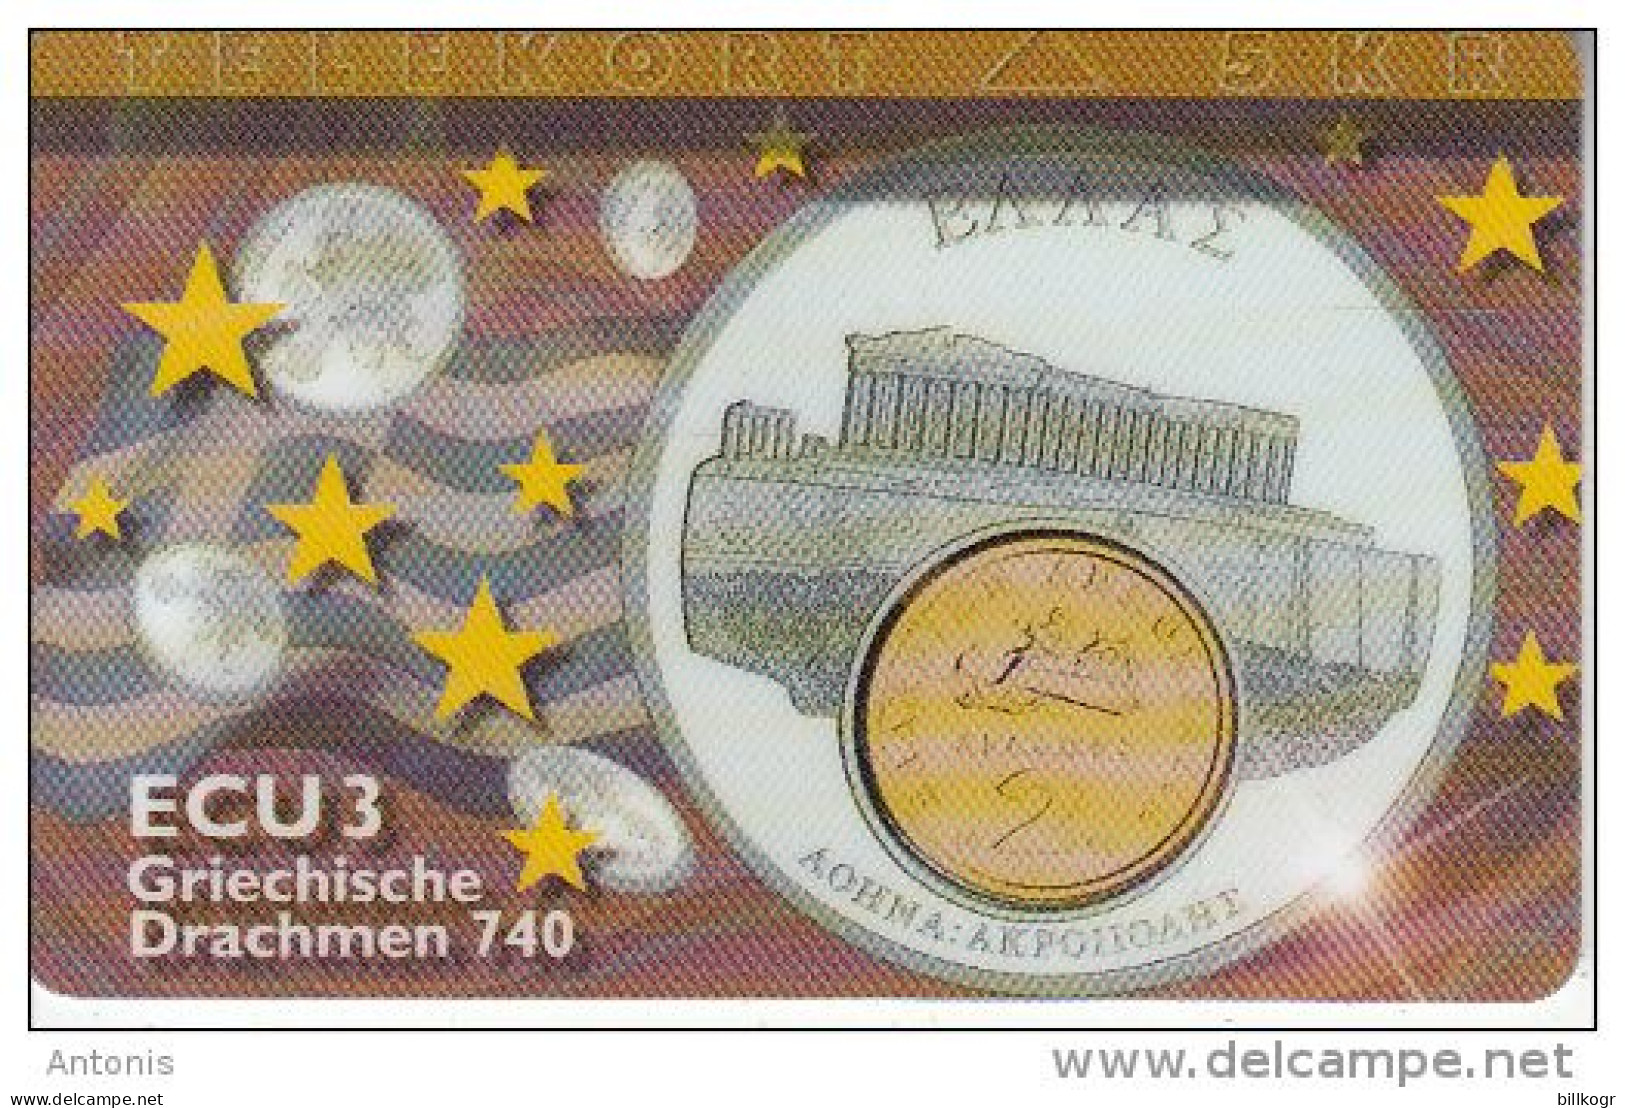 DENMARK - Athens/Acropolis, 2 GRD Coin, ECU Series/Greece, Tirage 700, 04/97, Mint - Dinamarca